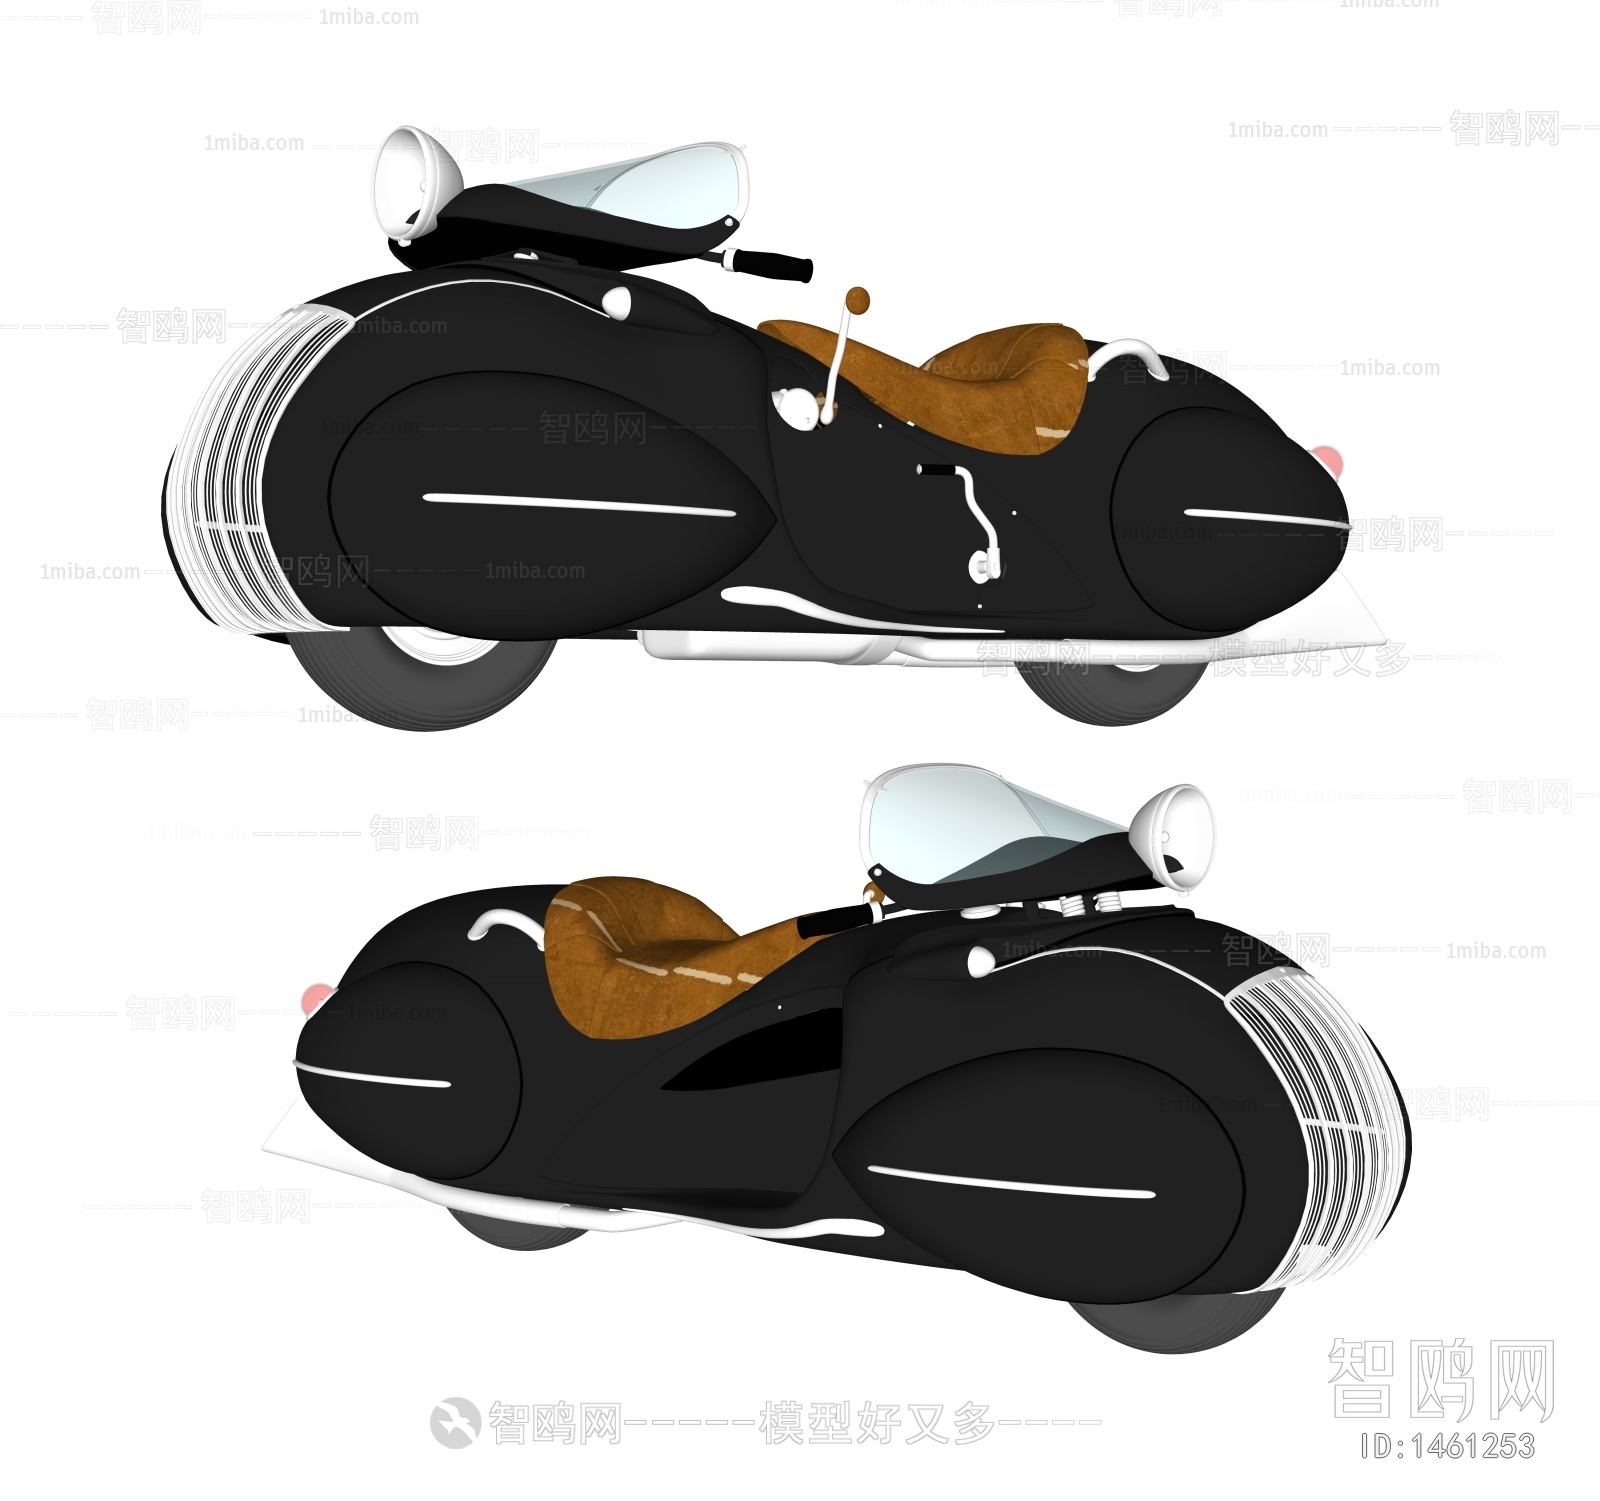 Modern Motorcycle